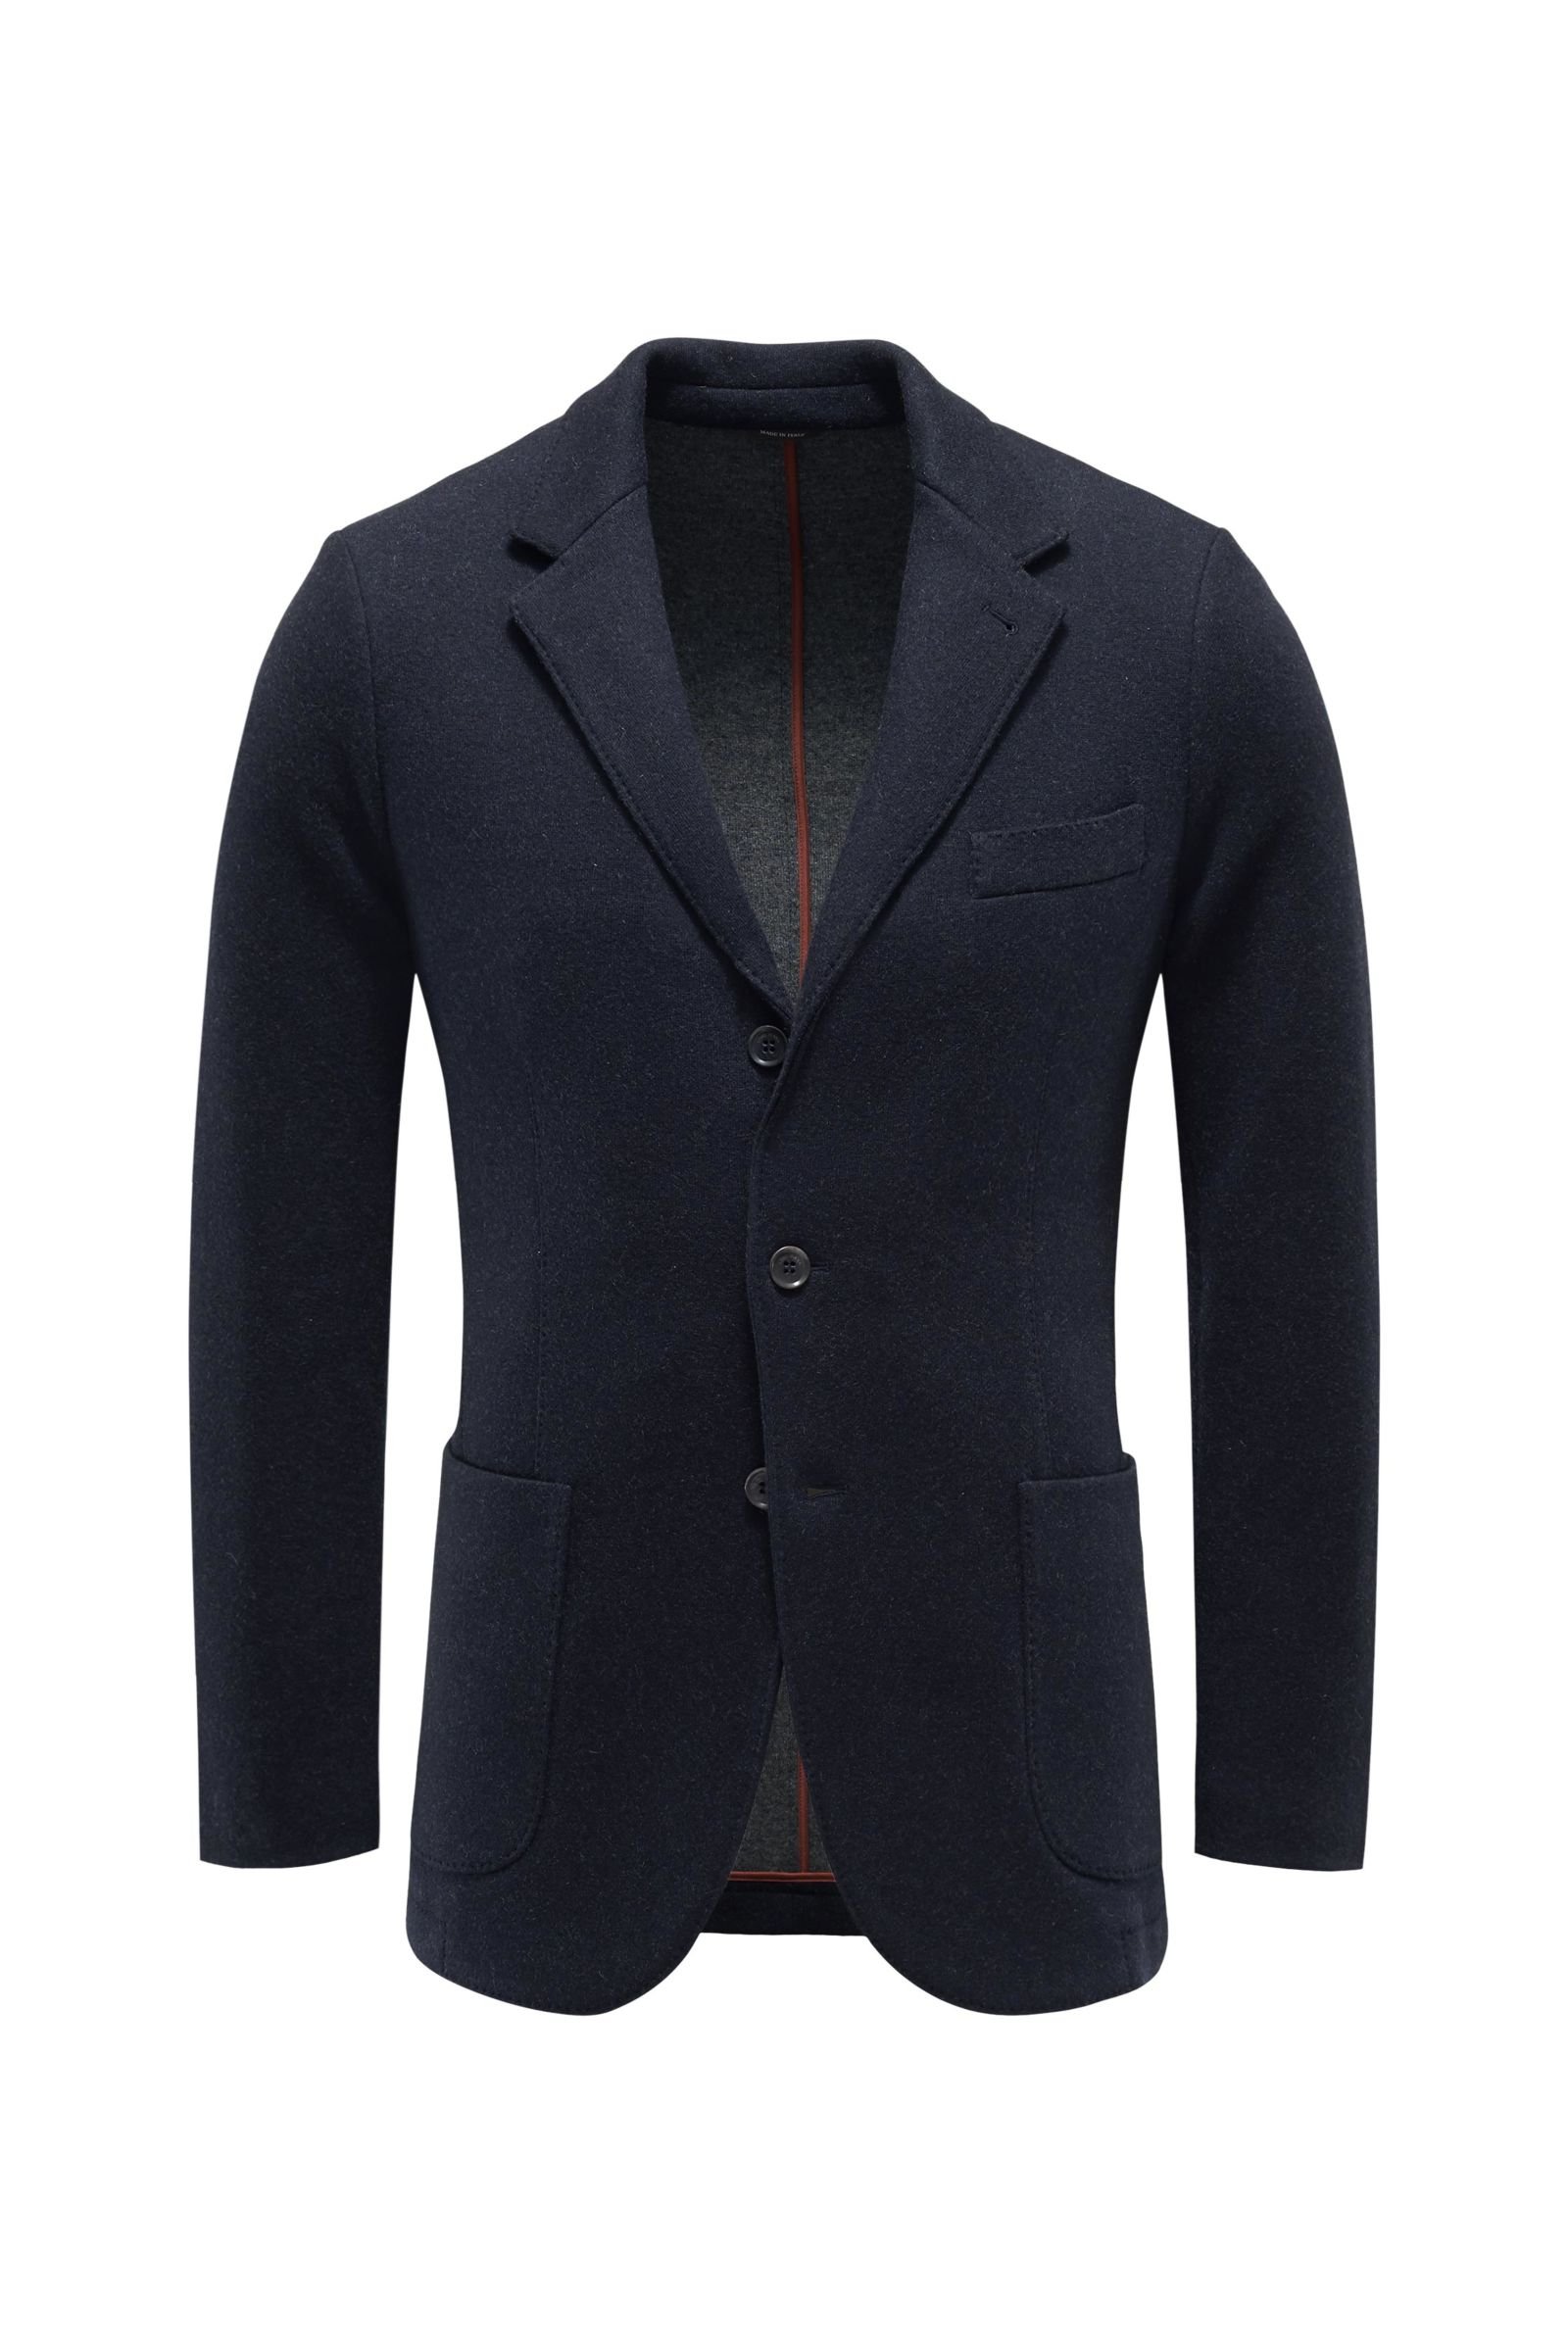 Jersey smart-casual jacket 'Sweater Jacket' navy